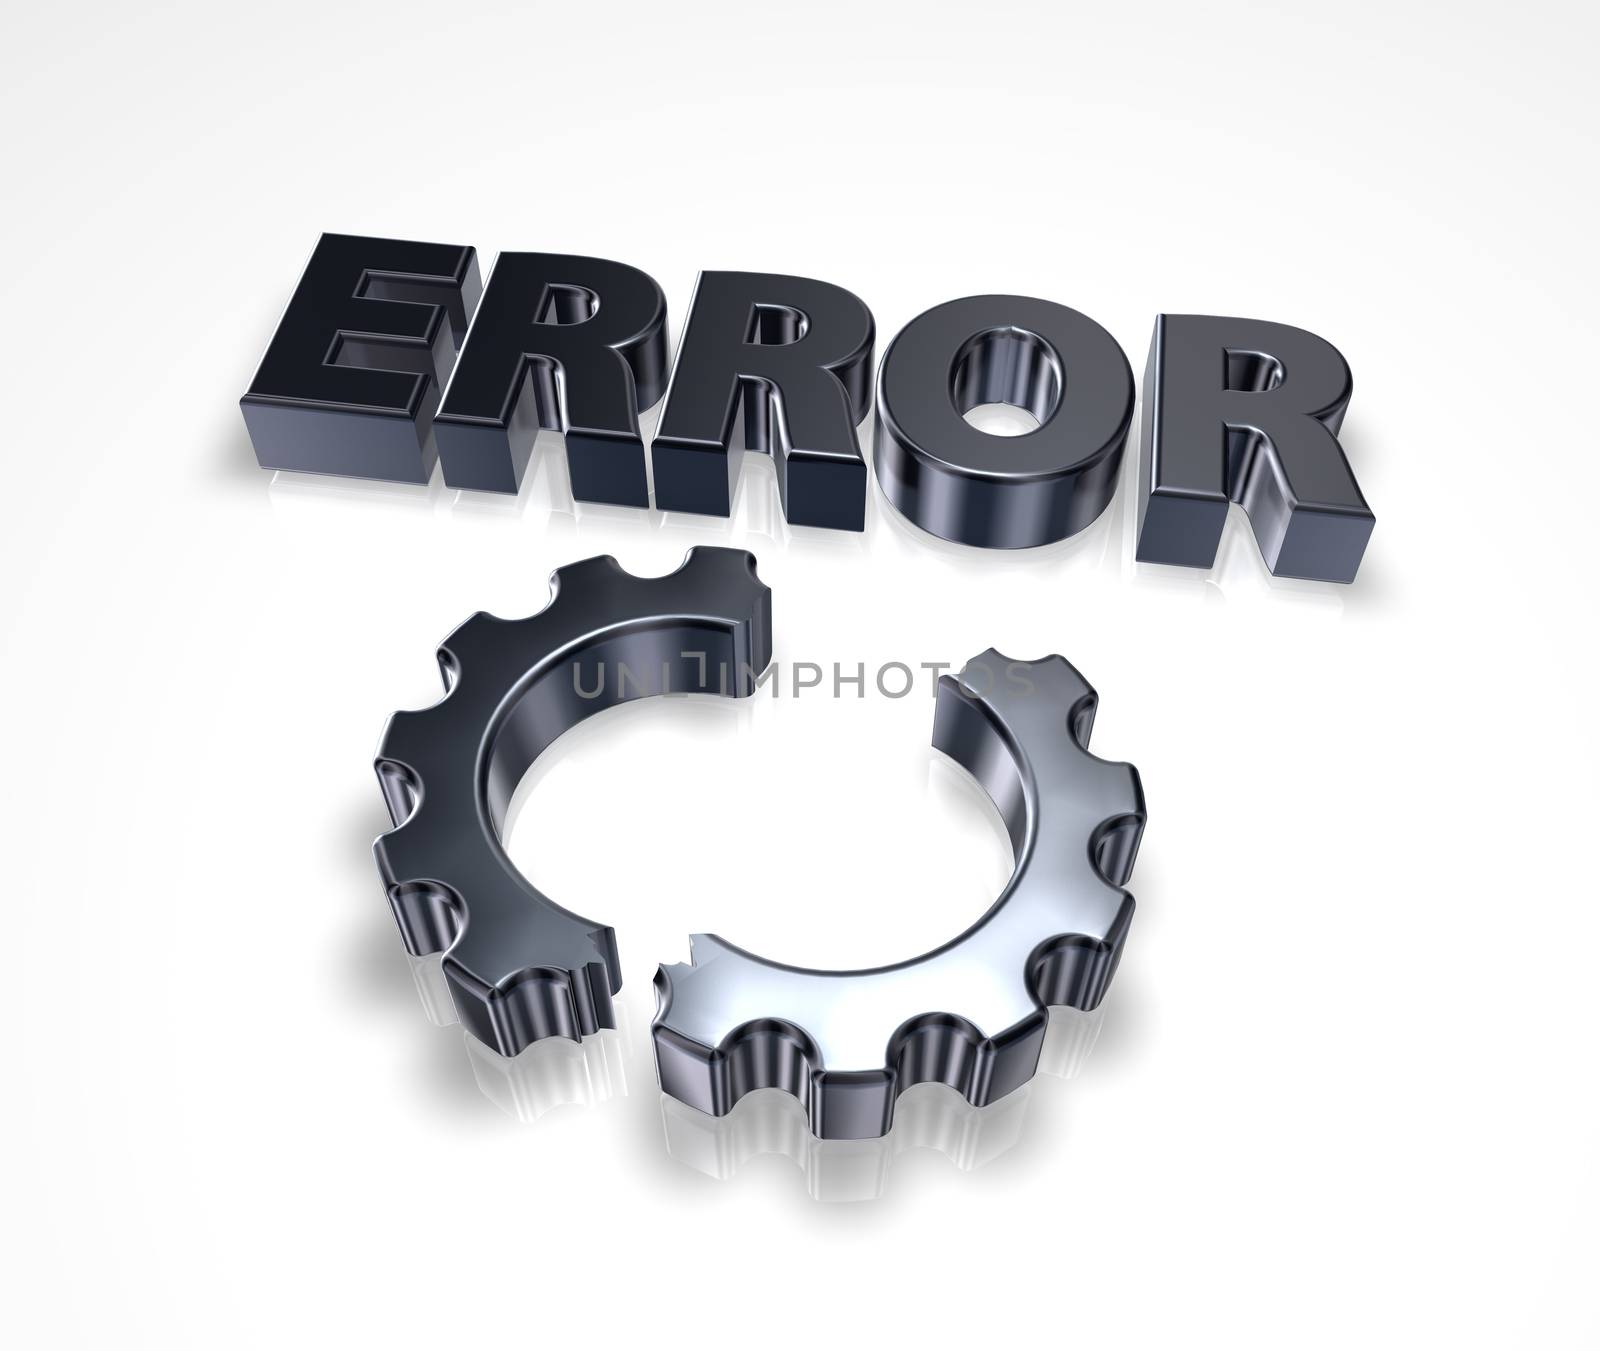 error message and broken cogwheel - 3d illustration